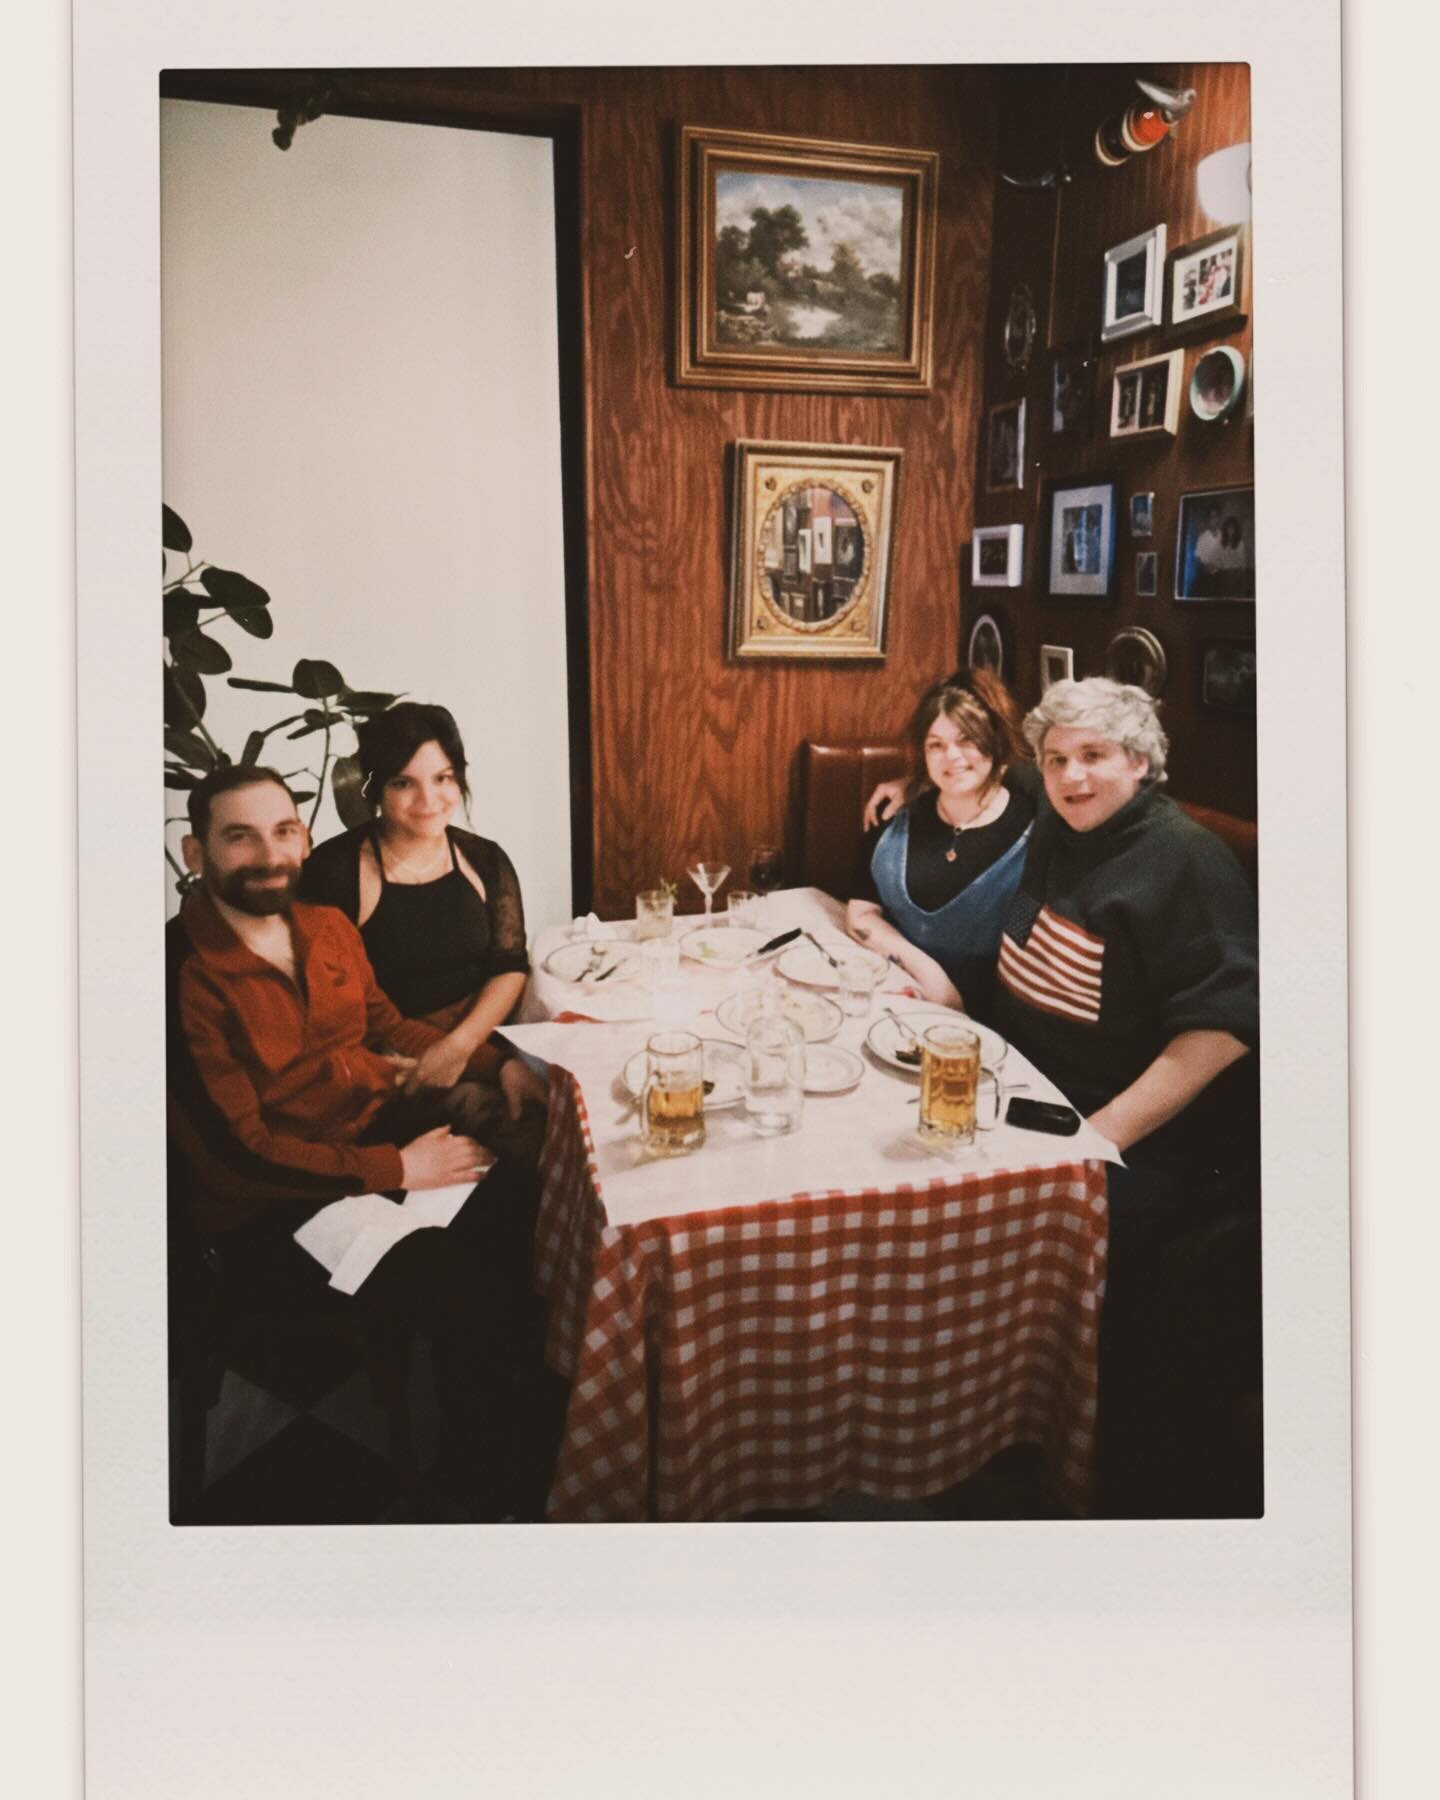 Friends. Mr. Polaroid @dudemanshouse &amp; Friends #velma #restaurant #friends #dining #backroom #hangout #dinner #datenight #cocktails #dinner #pizza #polariod #crazynick #polariod #photography #art #friends #family #ridgewood #nyc #queens #italiana